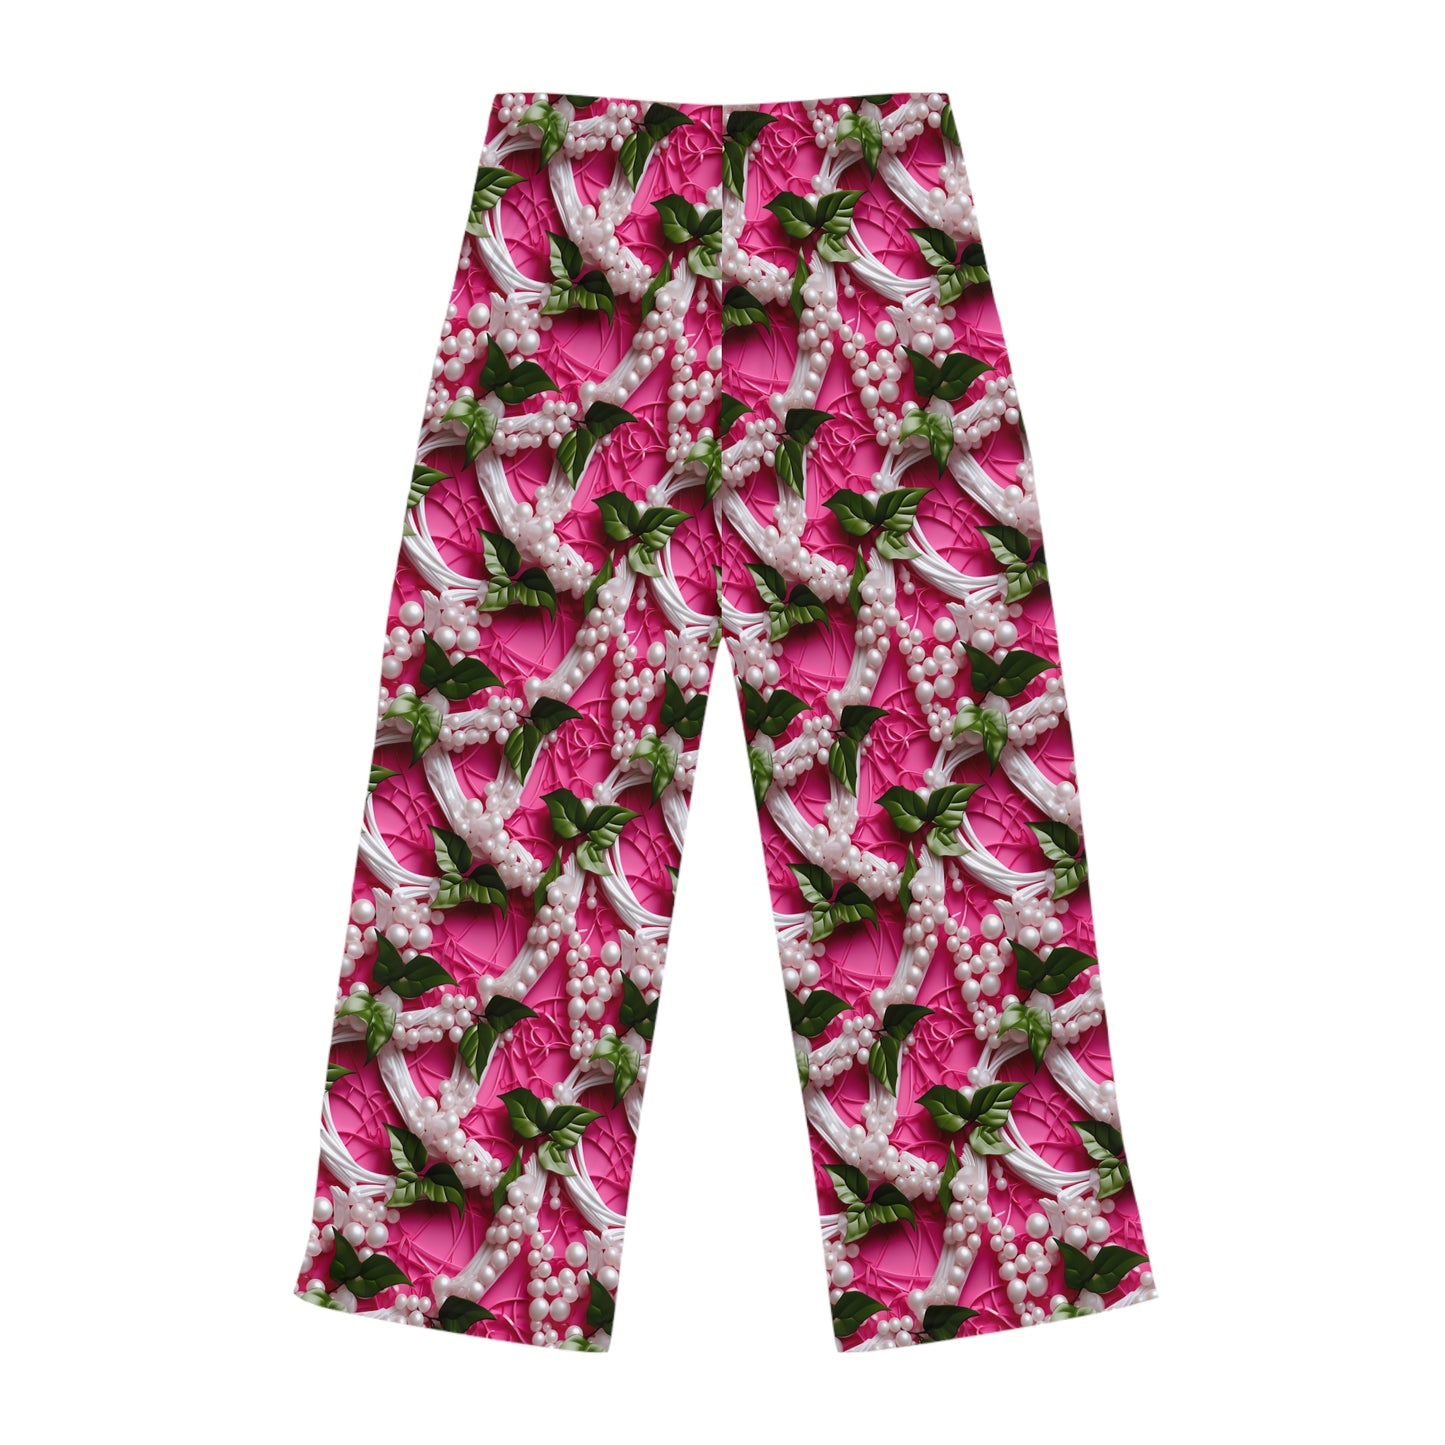 Ivy & Pearls Women's Pajama Pants